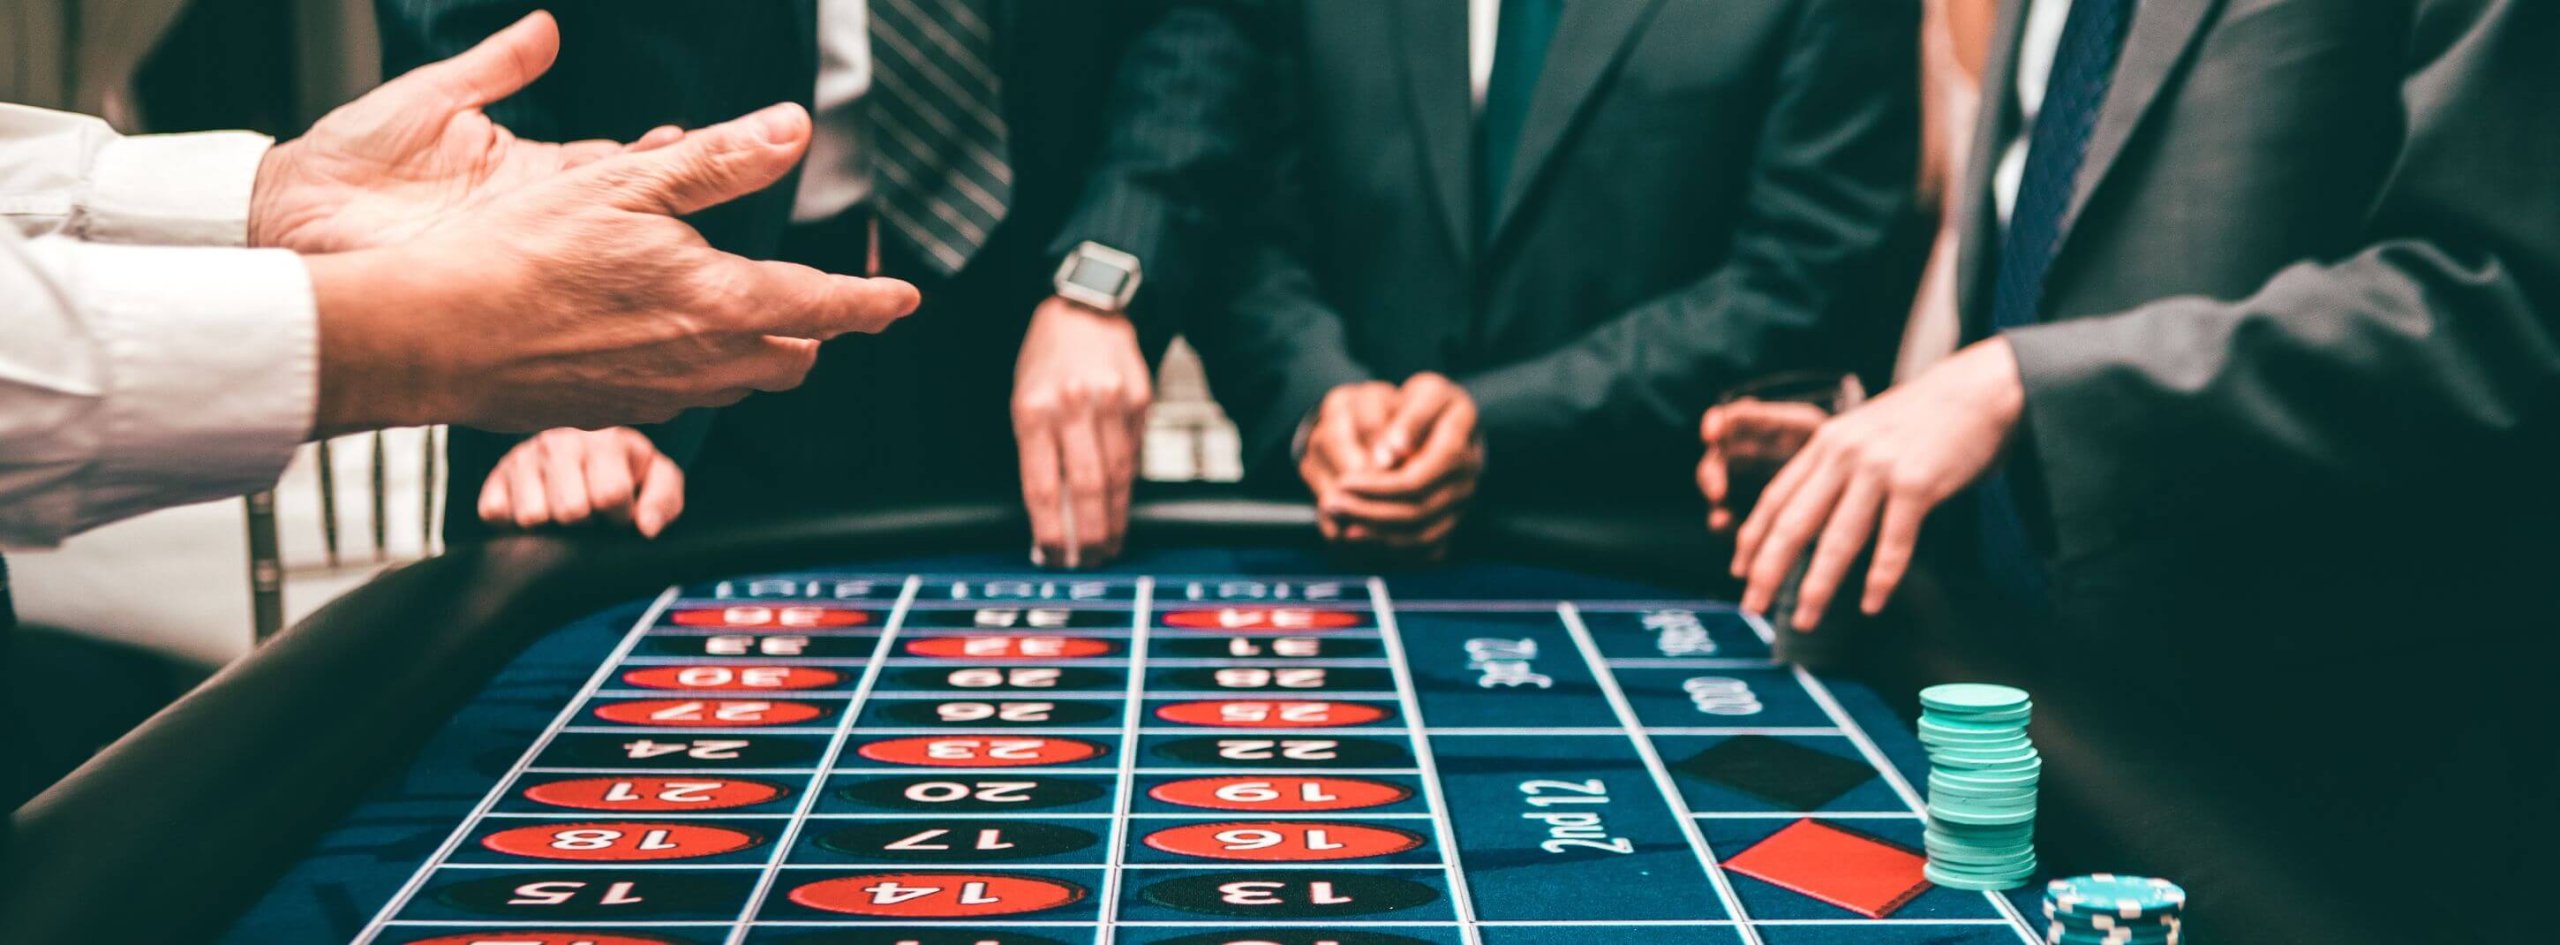 Auckland University: 6% Adult Population Has Gambling Problem